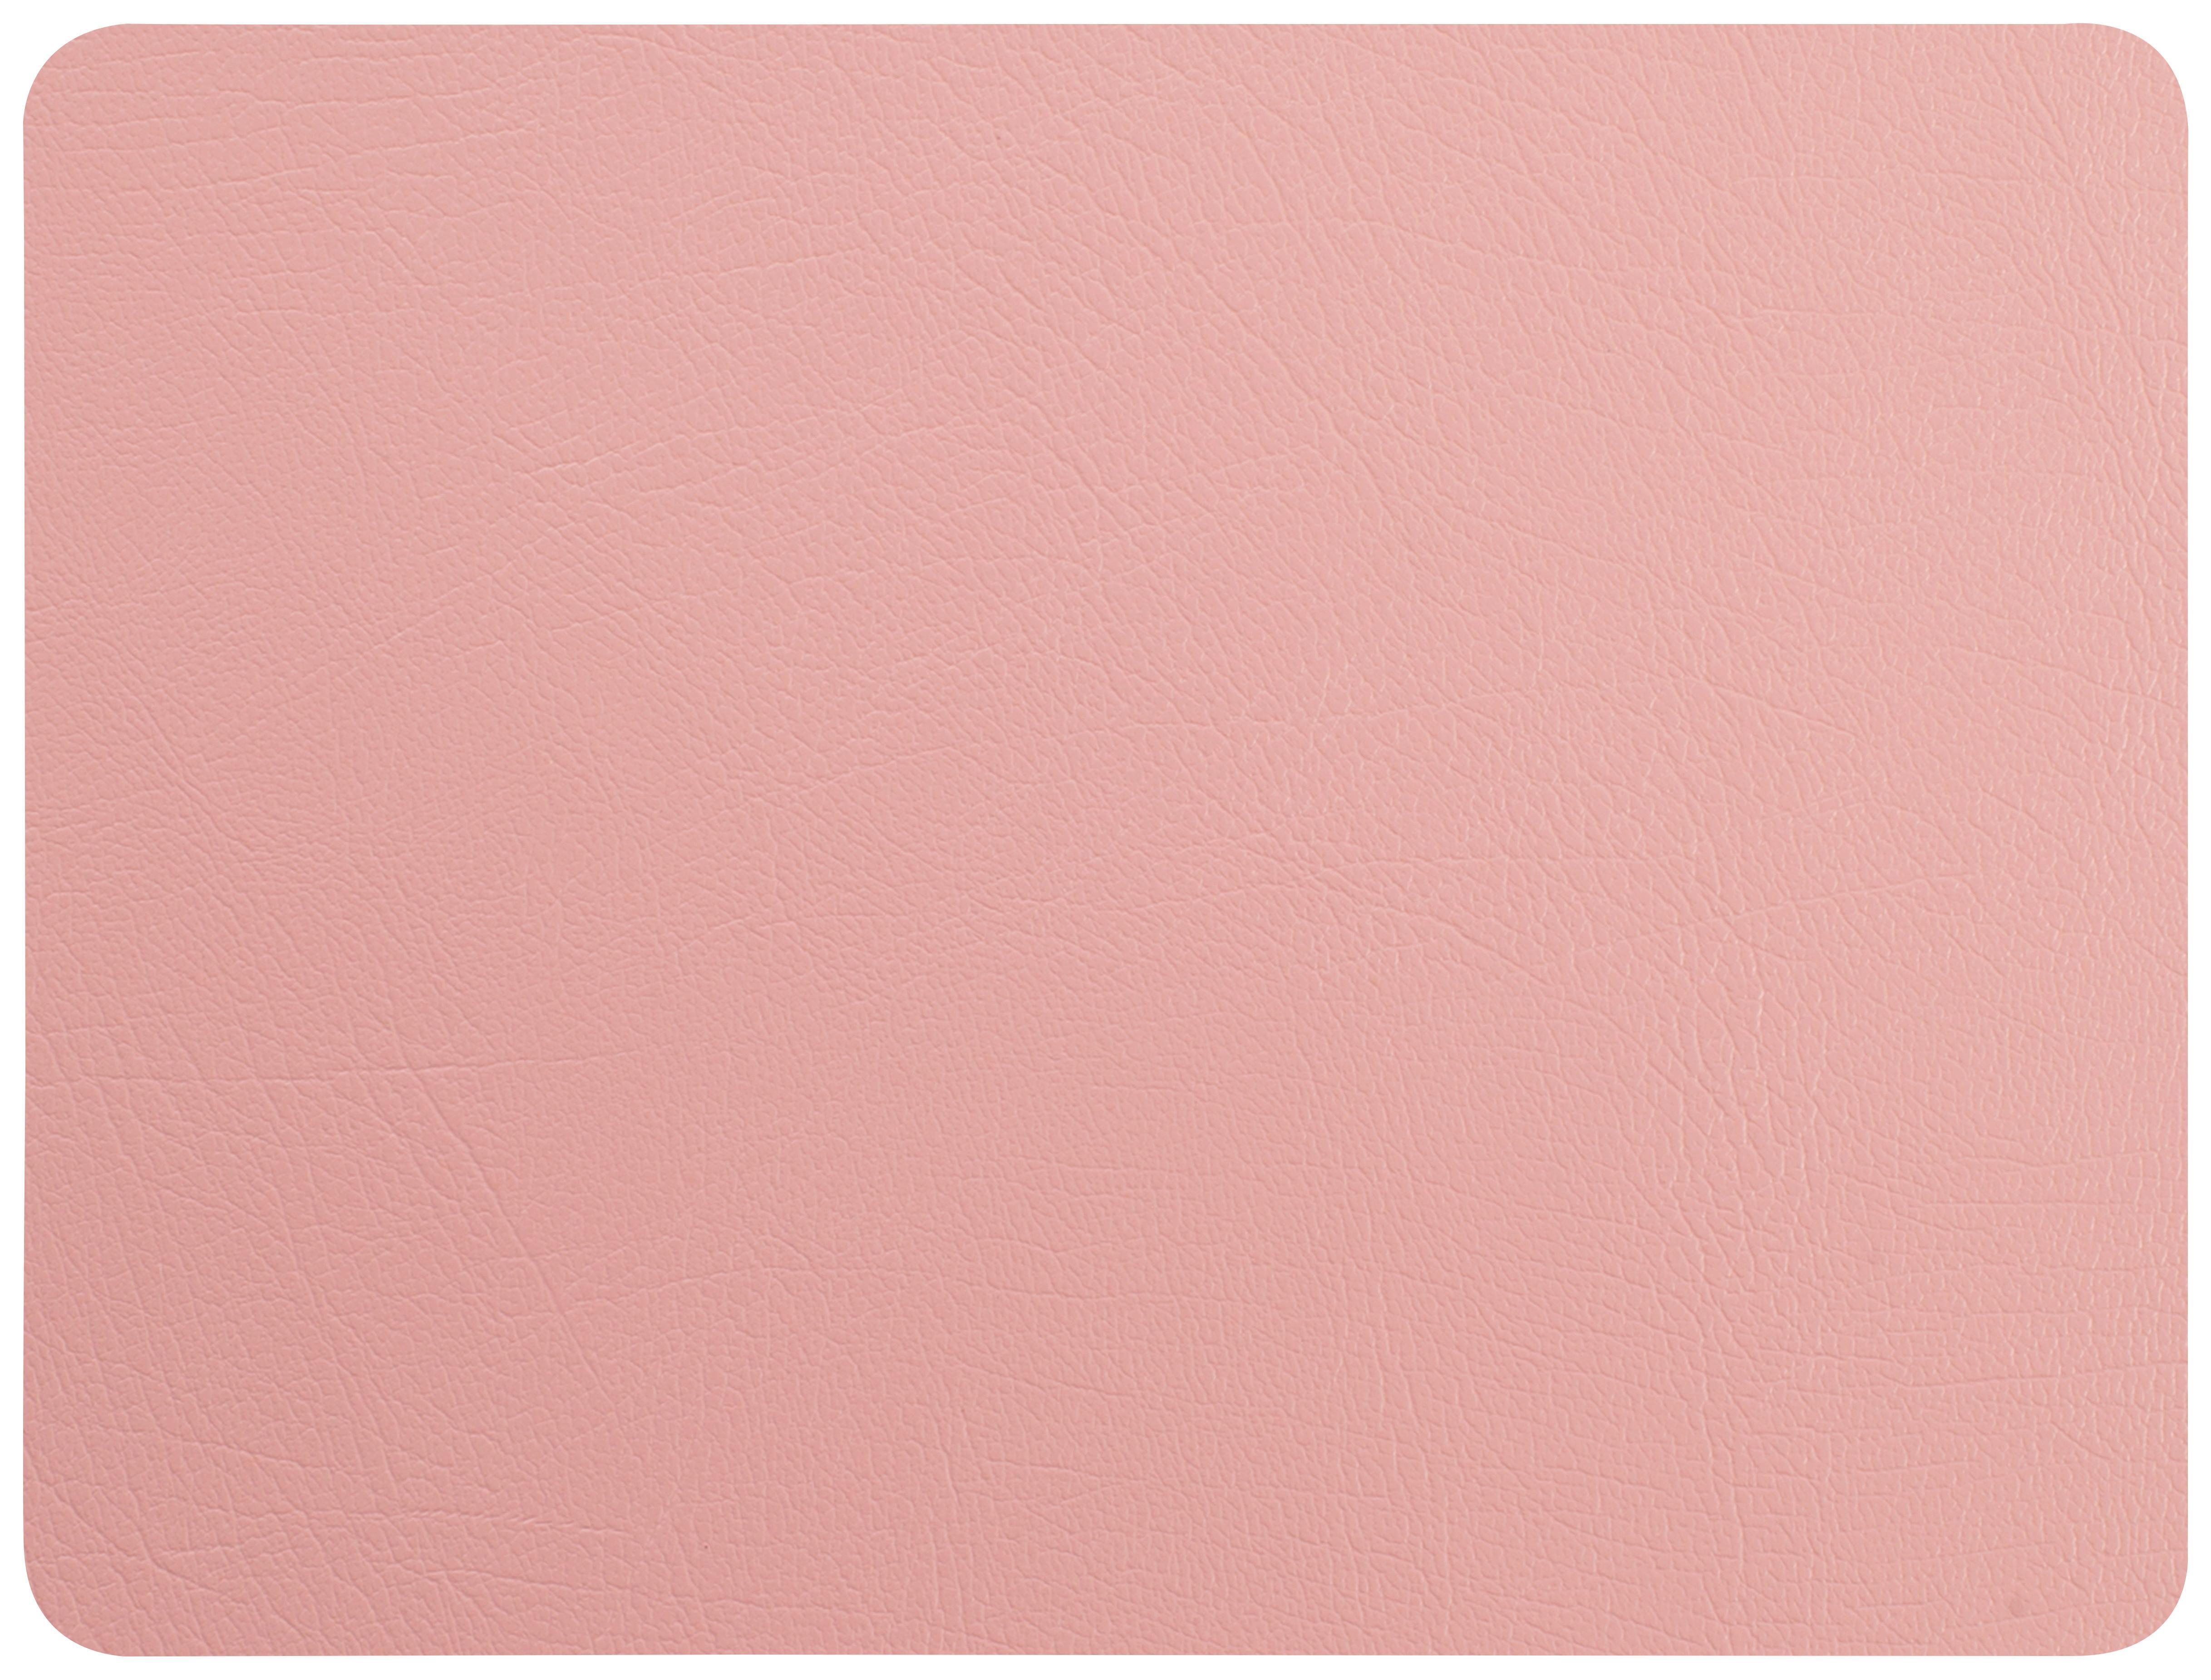 Suport farfurie Jette - roz, piele (33/42cm) - Premium Living